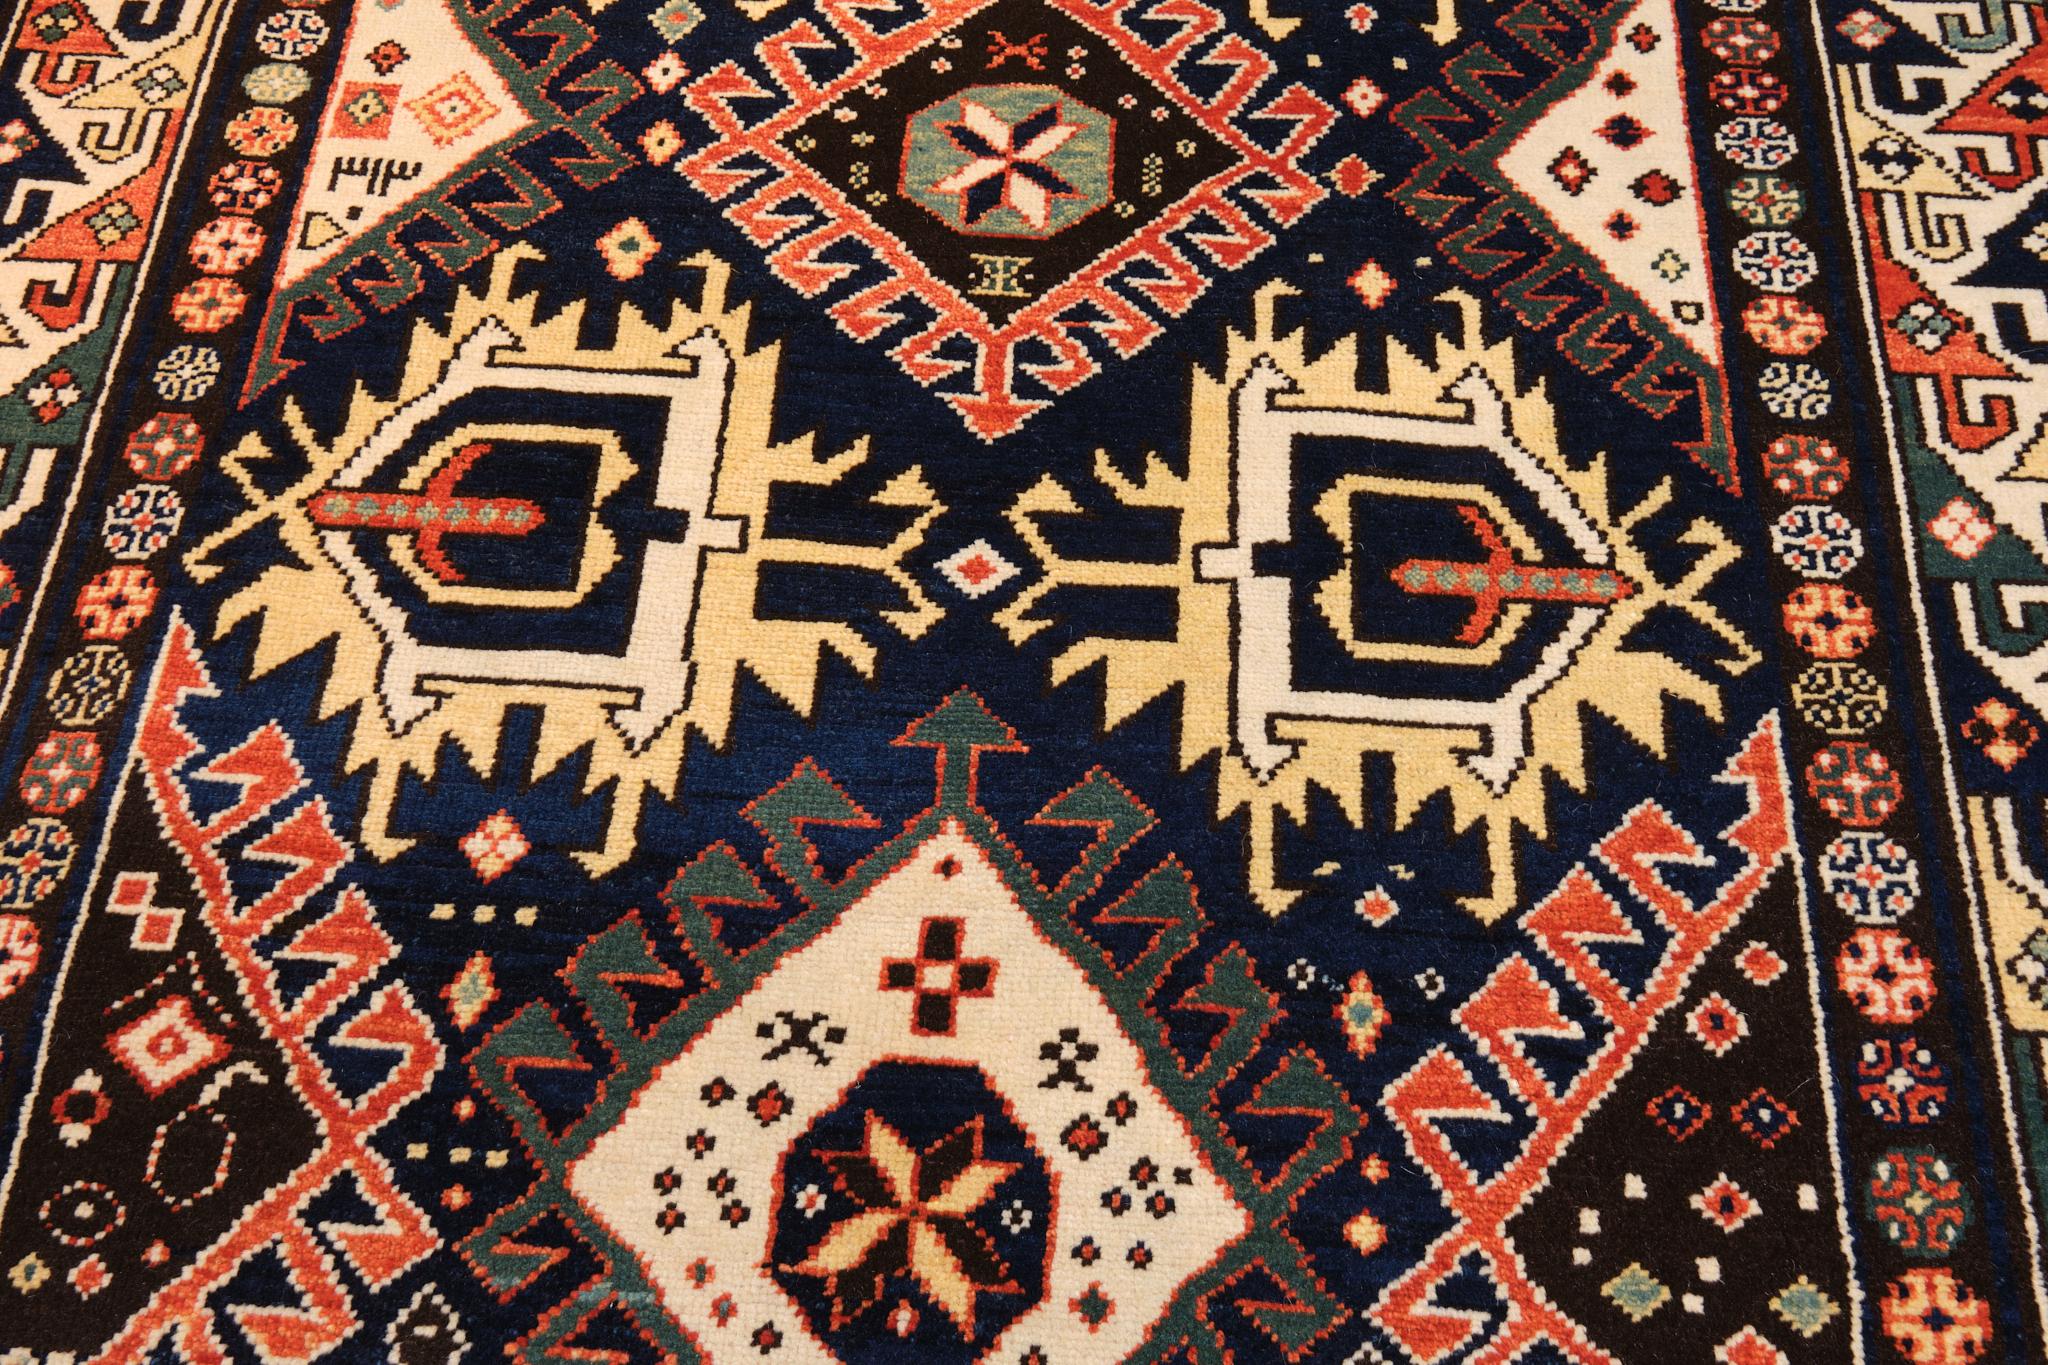 Contemporary Ararat Rugs Derbend Kazak Rug, 19th C. Caucasian Revival Carpet Natural Dyed For Sale